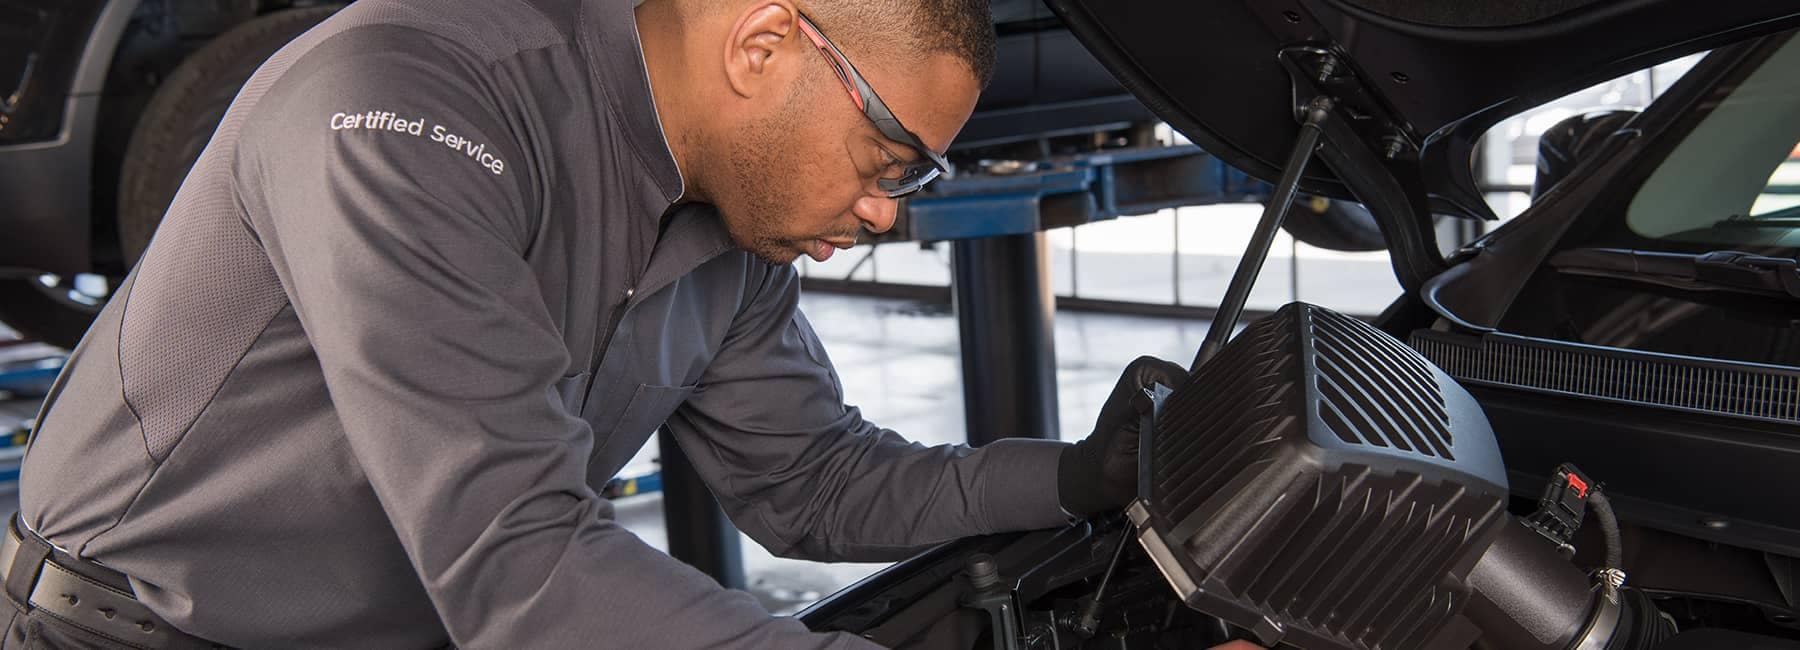 Certified technician inspects car engine